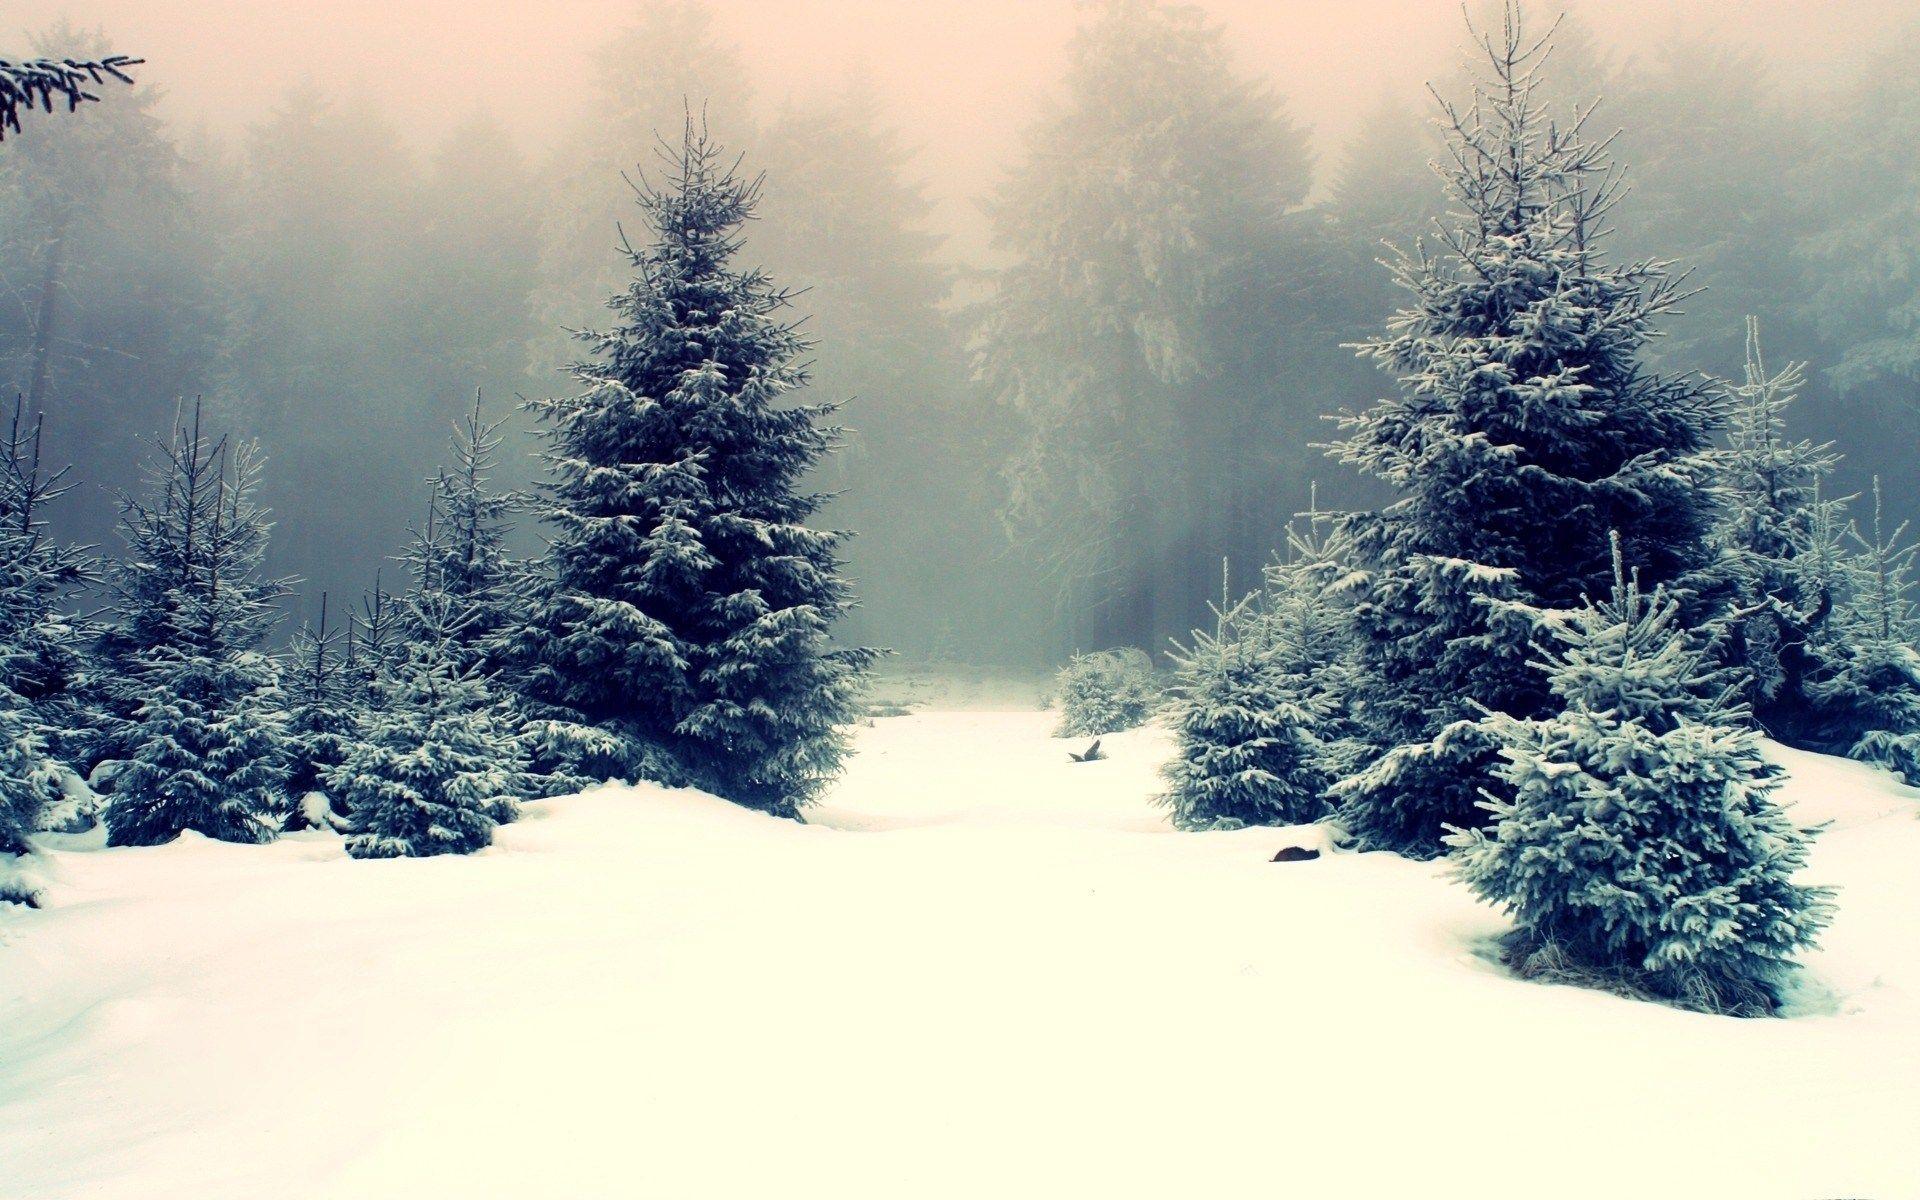 W I N T E R. Winter wallpaper, Snow forest, Winter trees